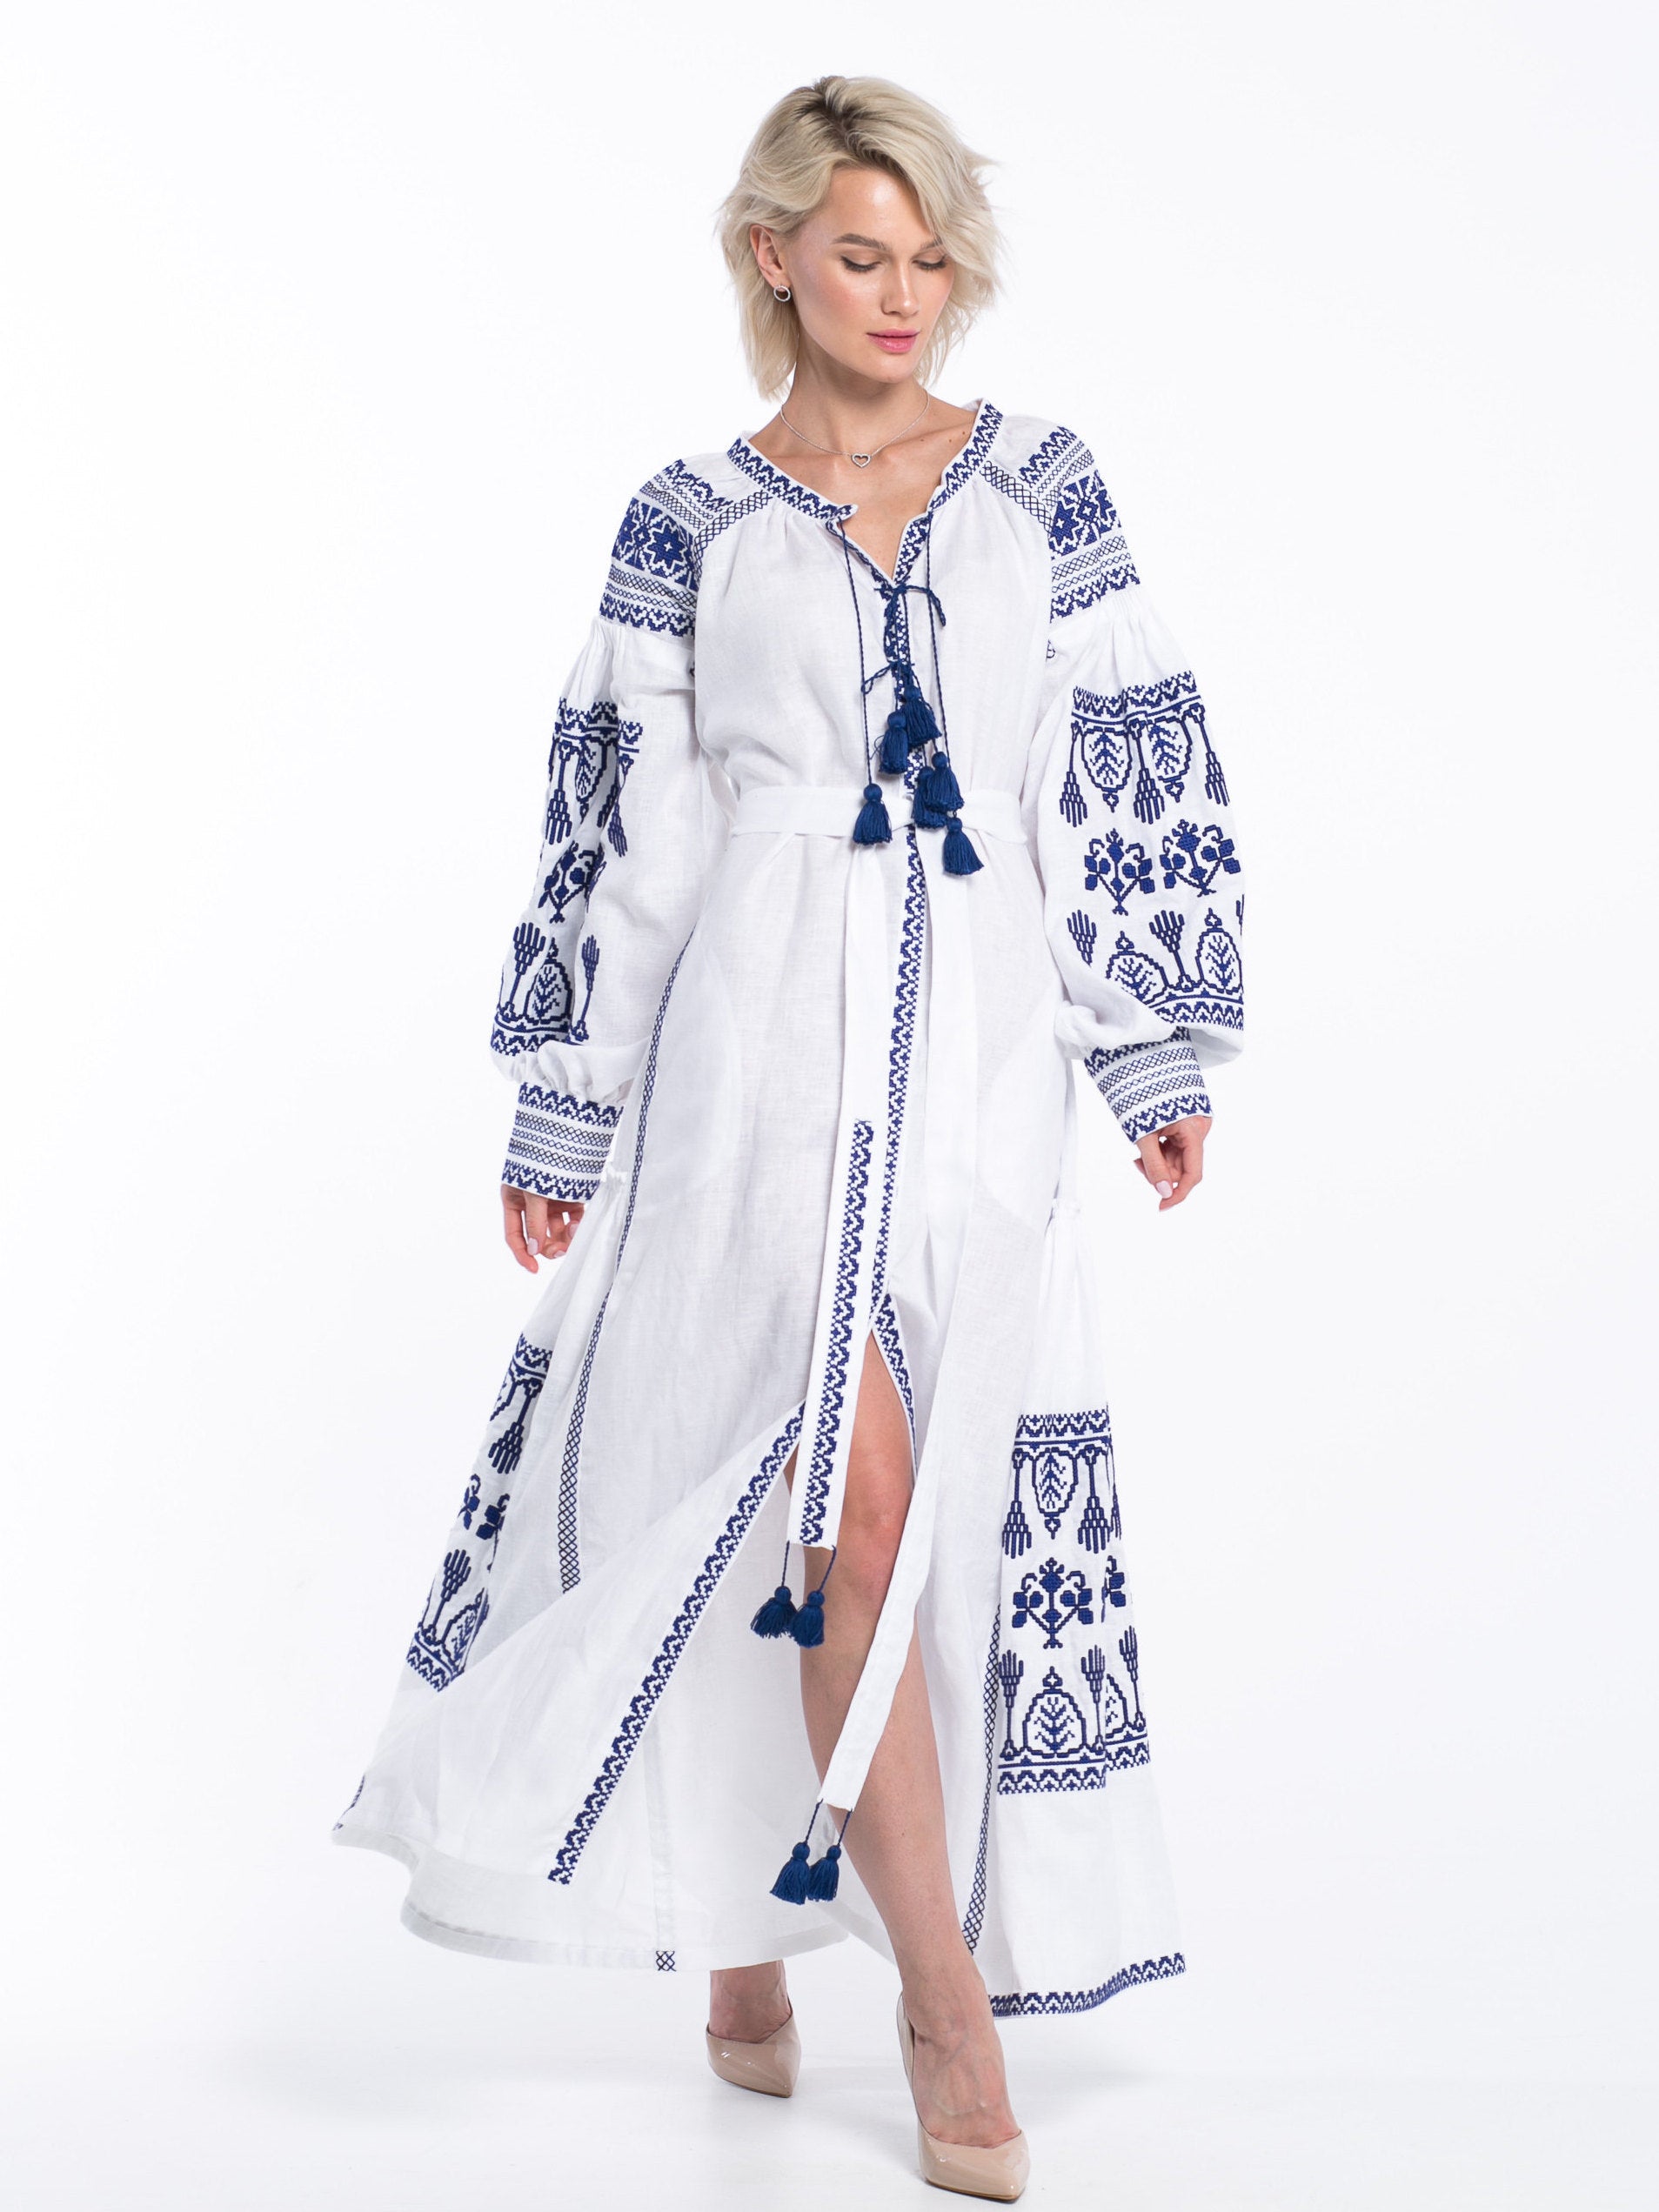 Iconic boho wedding dress Fashion embroidered kaftan Ukrainian vyshyvanka robe